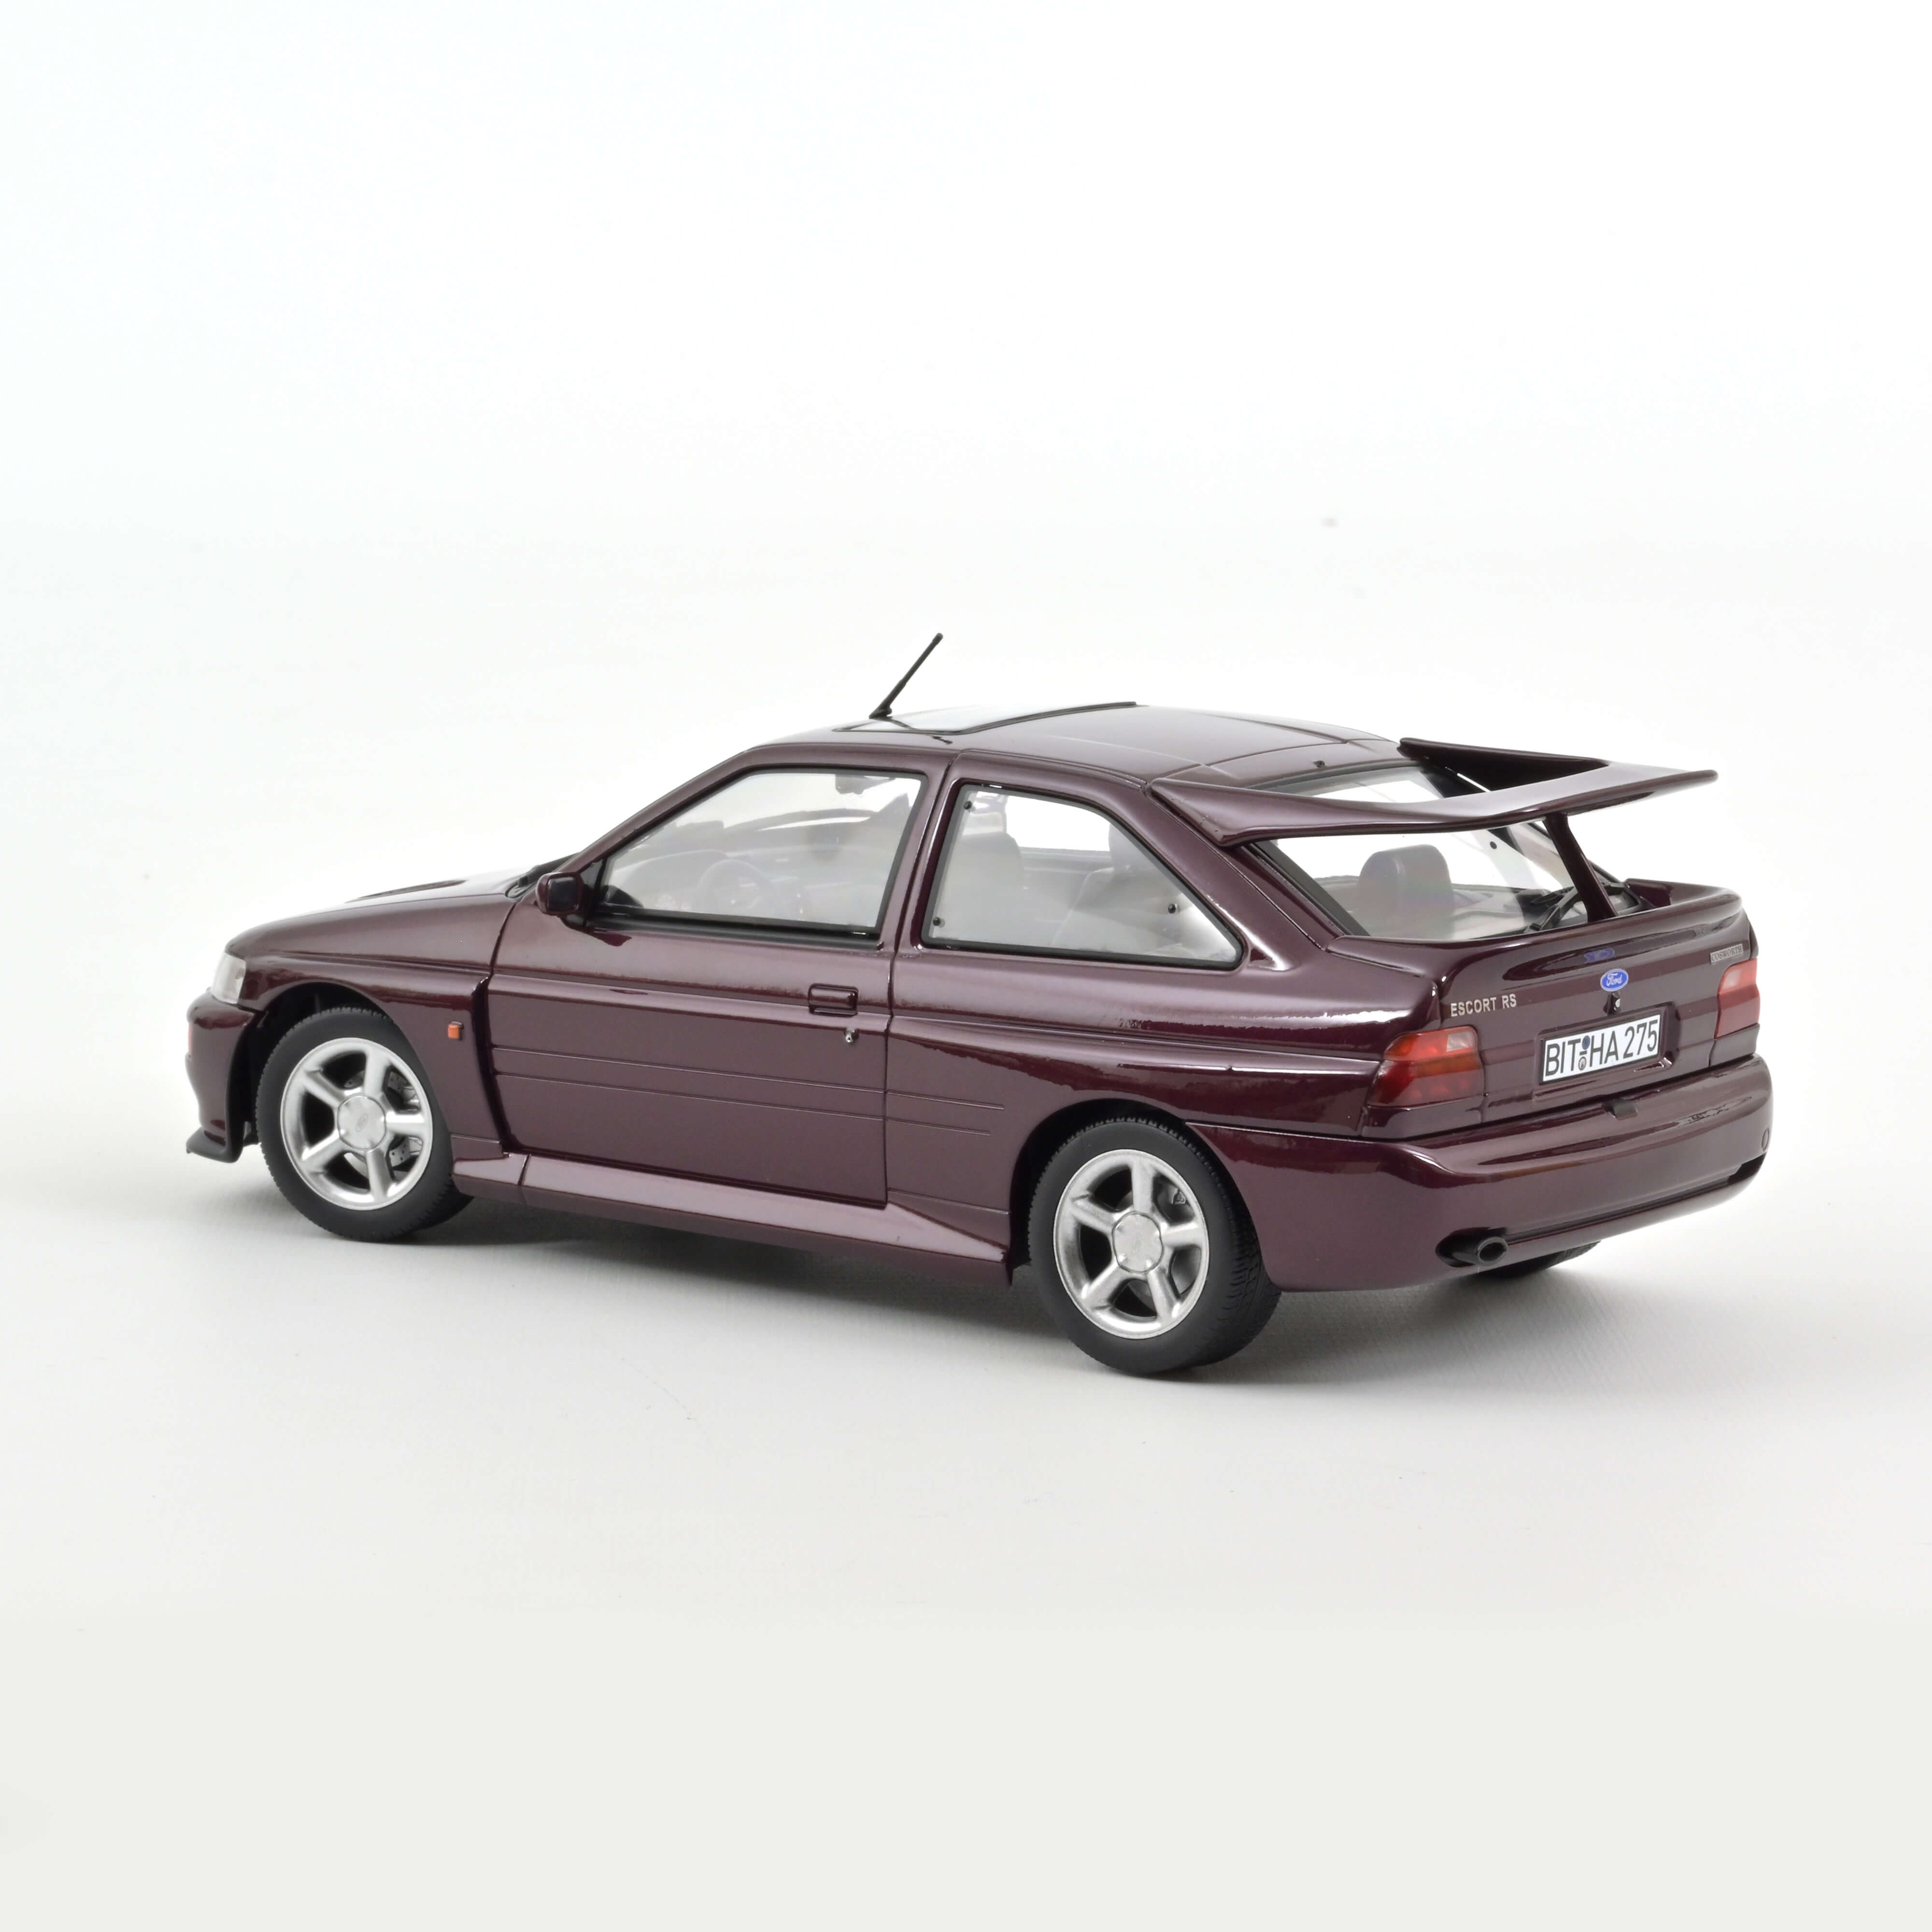 Ford Escort Cosworth 1992 – Purple metallic